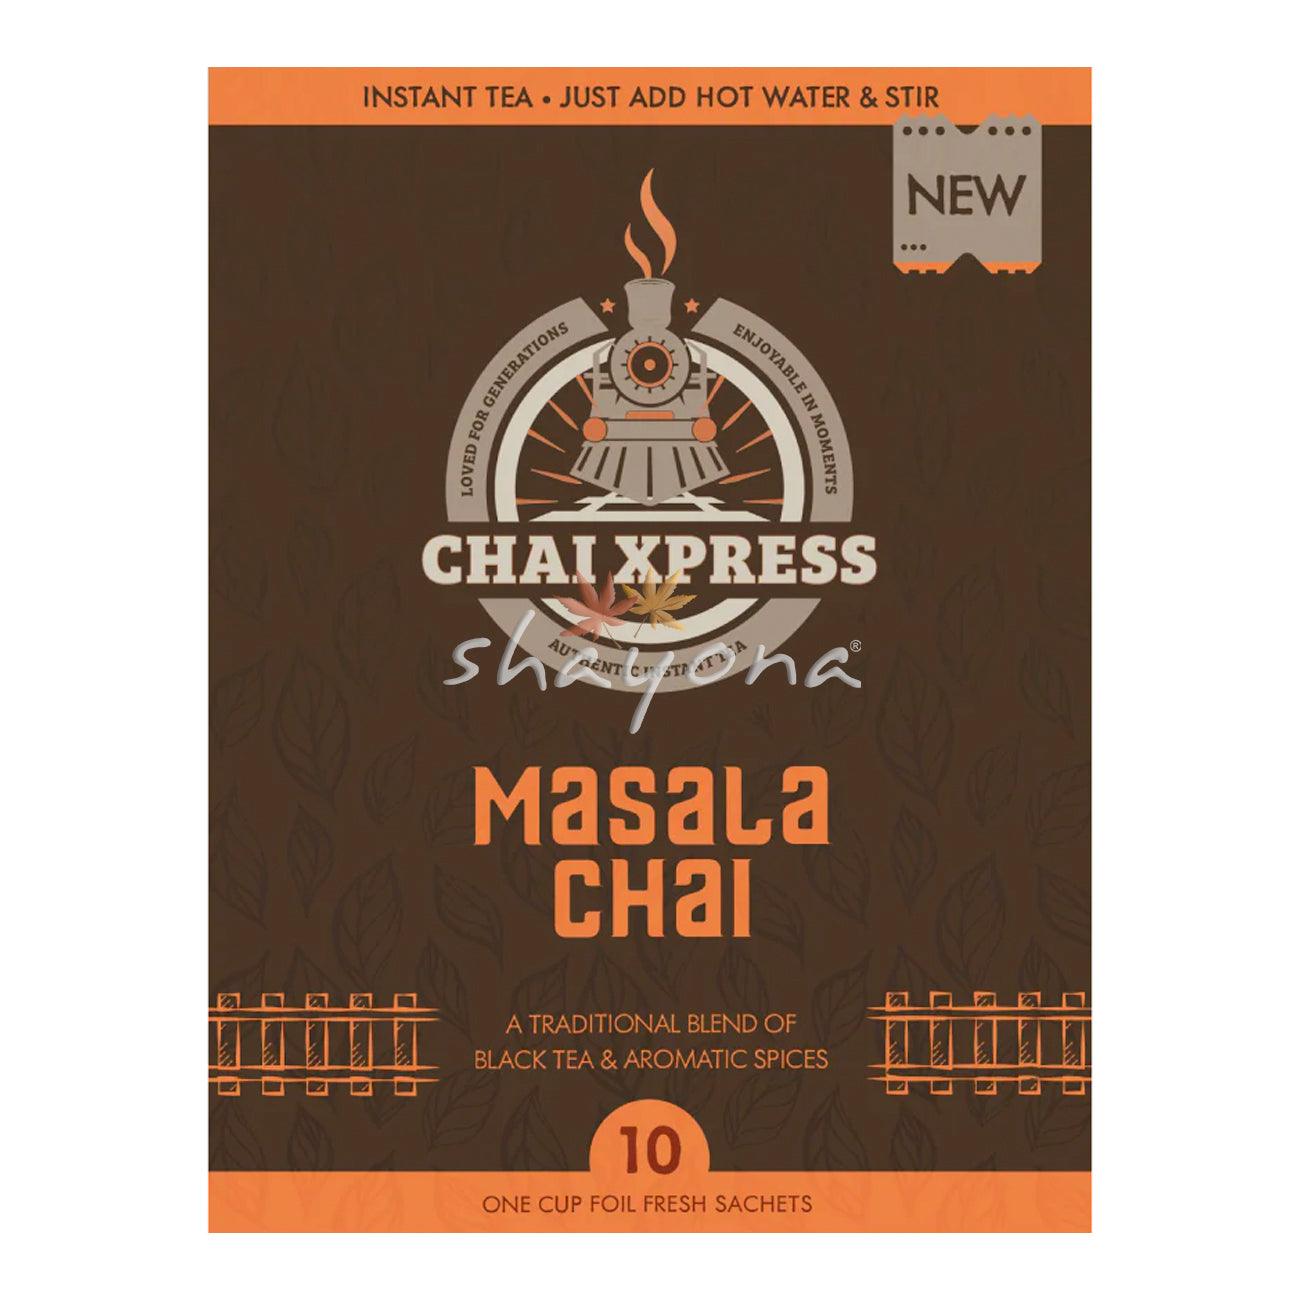 Chai Xpress Masala Chai - Shayona UK